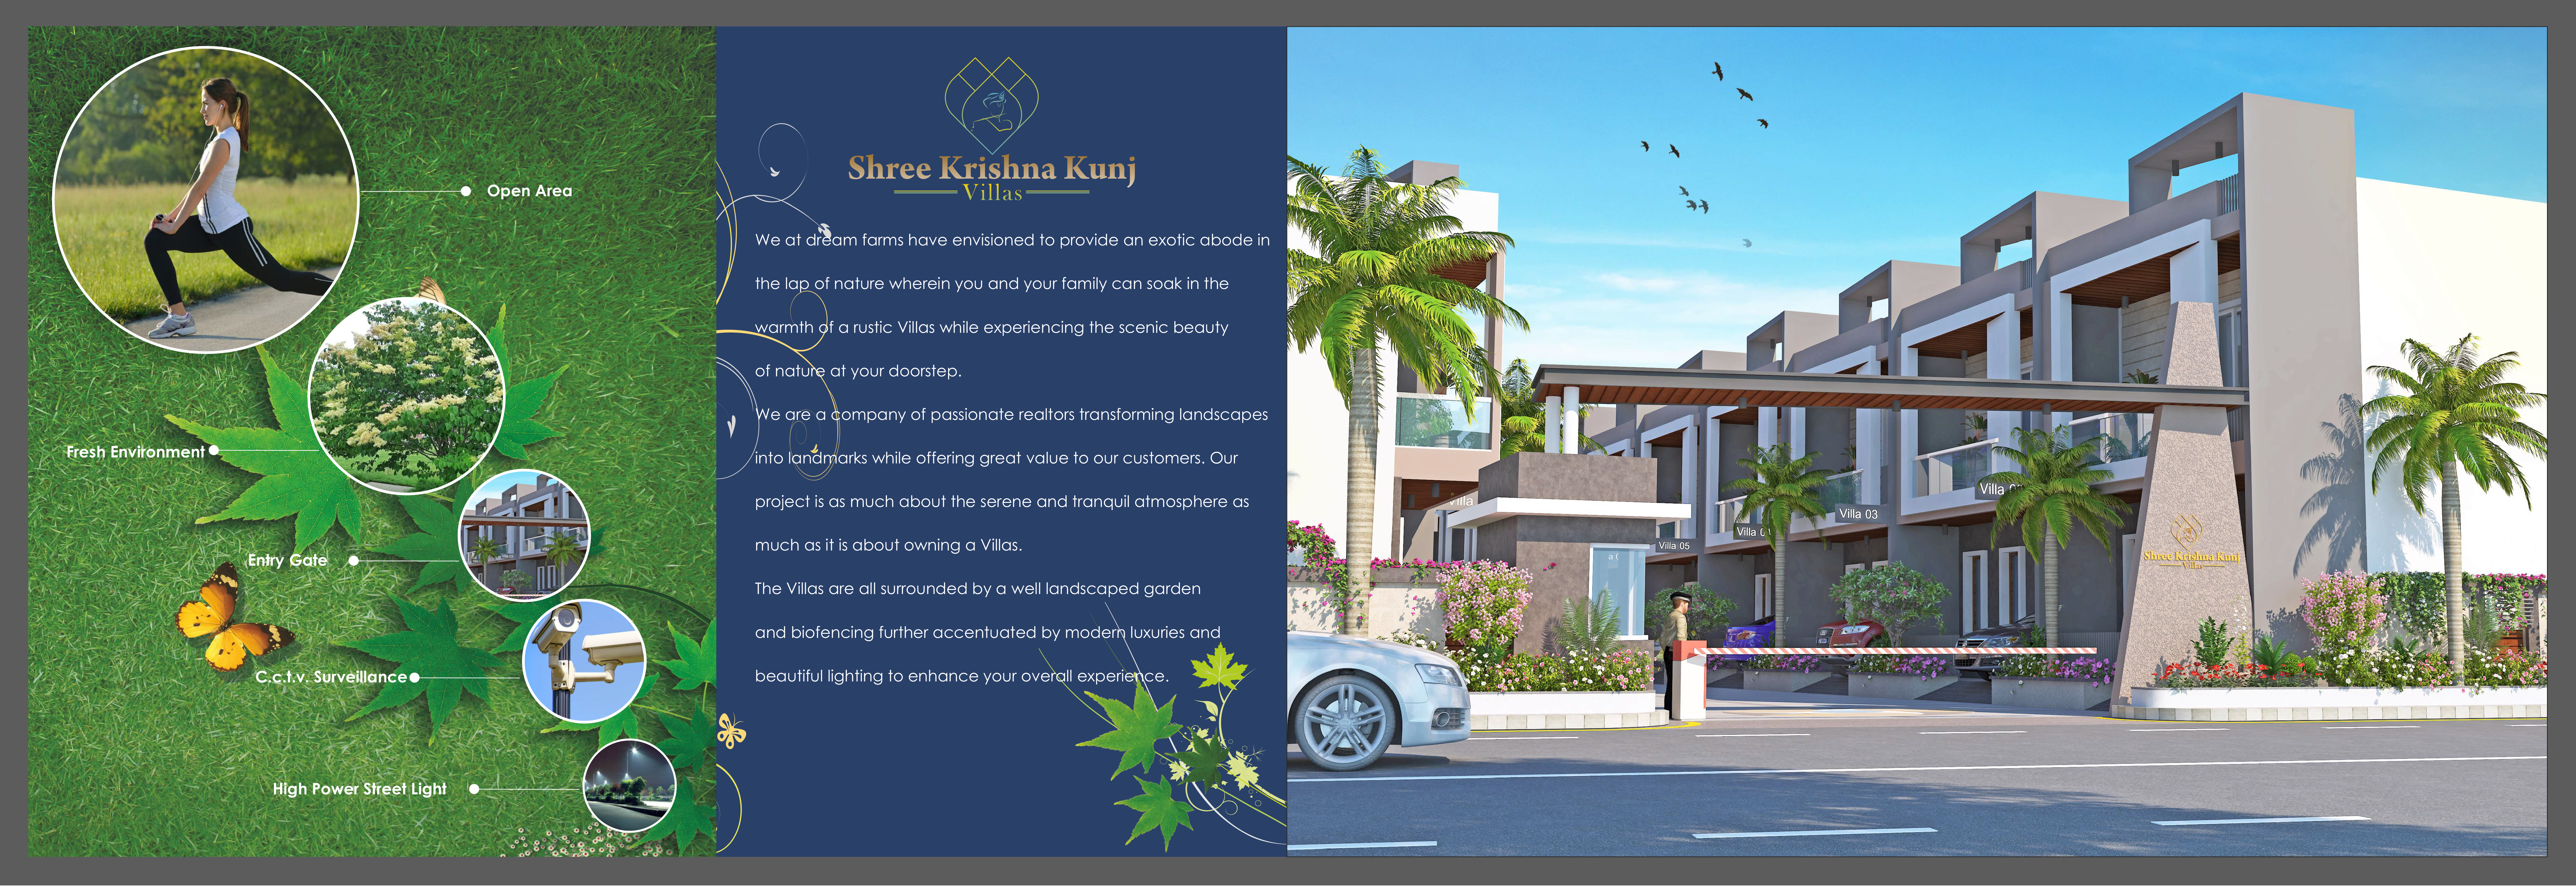 3BHK Duplex Ultra Luxury Villa For Sale In Kanakpura Jaipur - Shree Krishna Kunj Villas